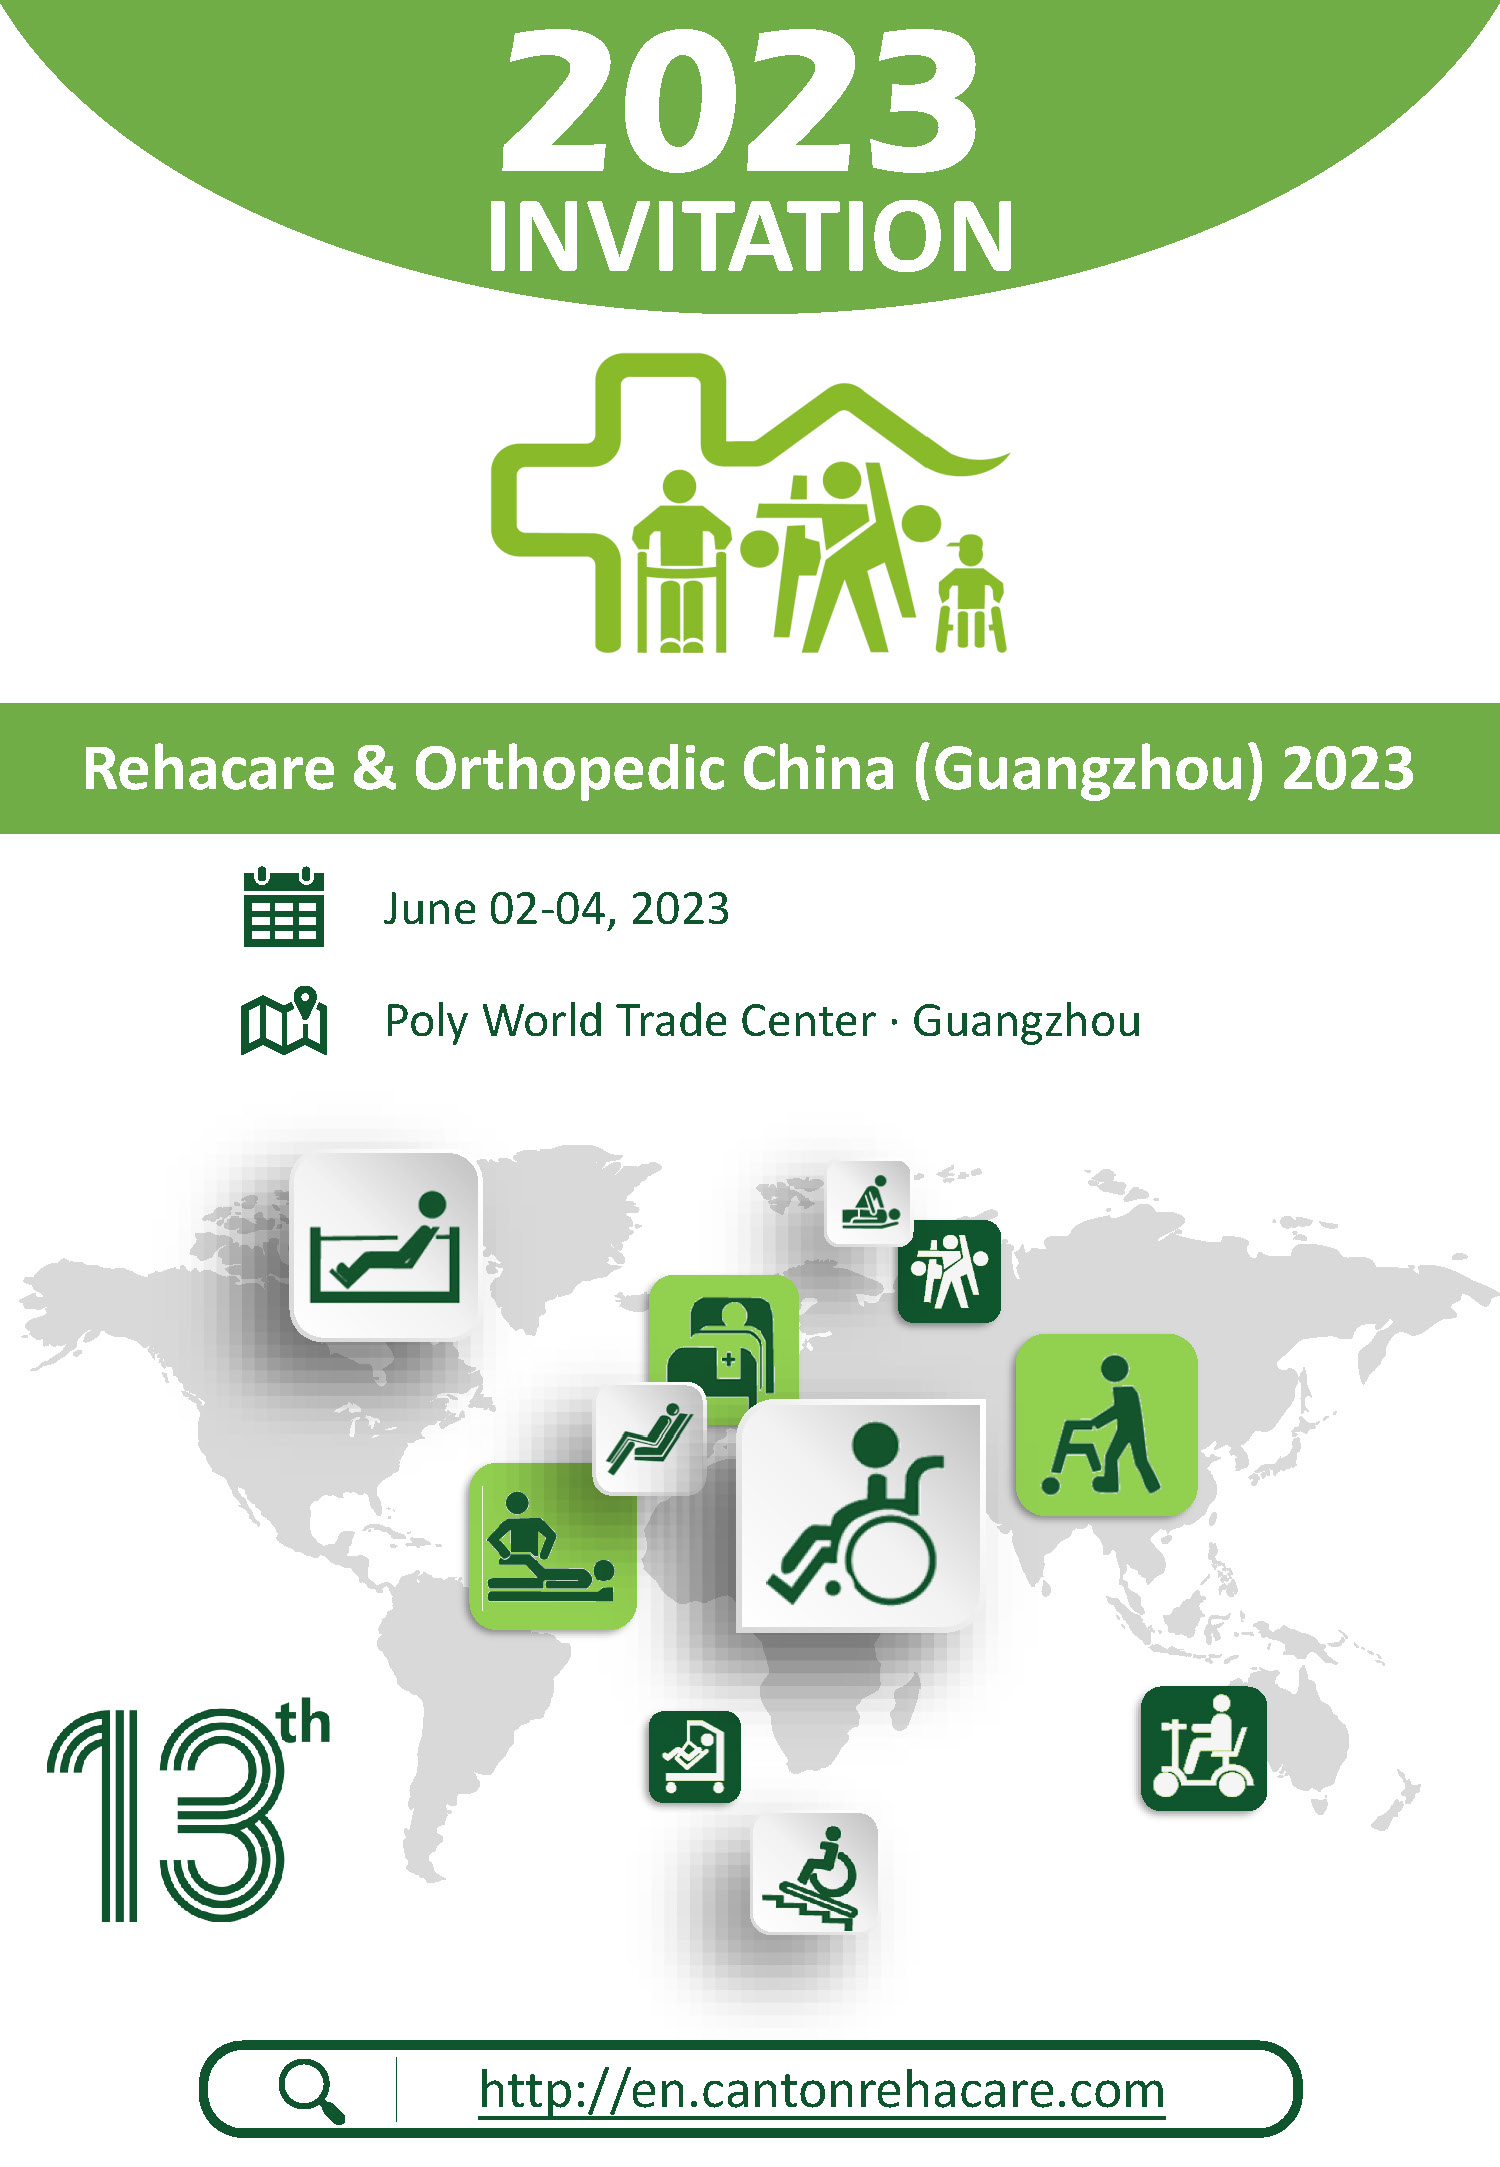 Rehacare & Orthopedic China (Guangzhou) 2023